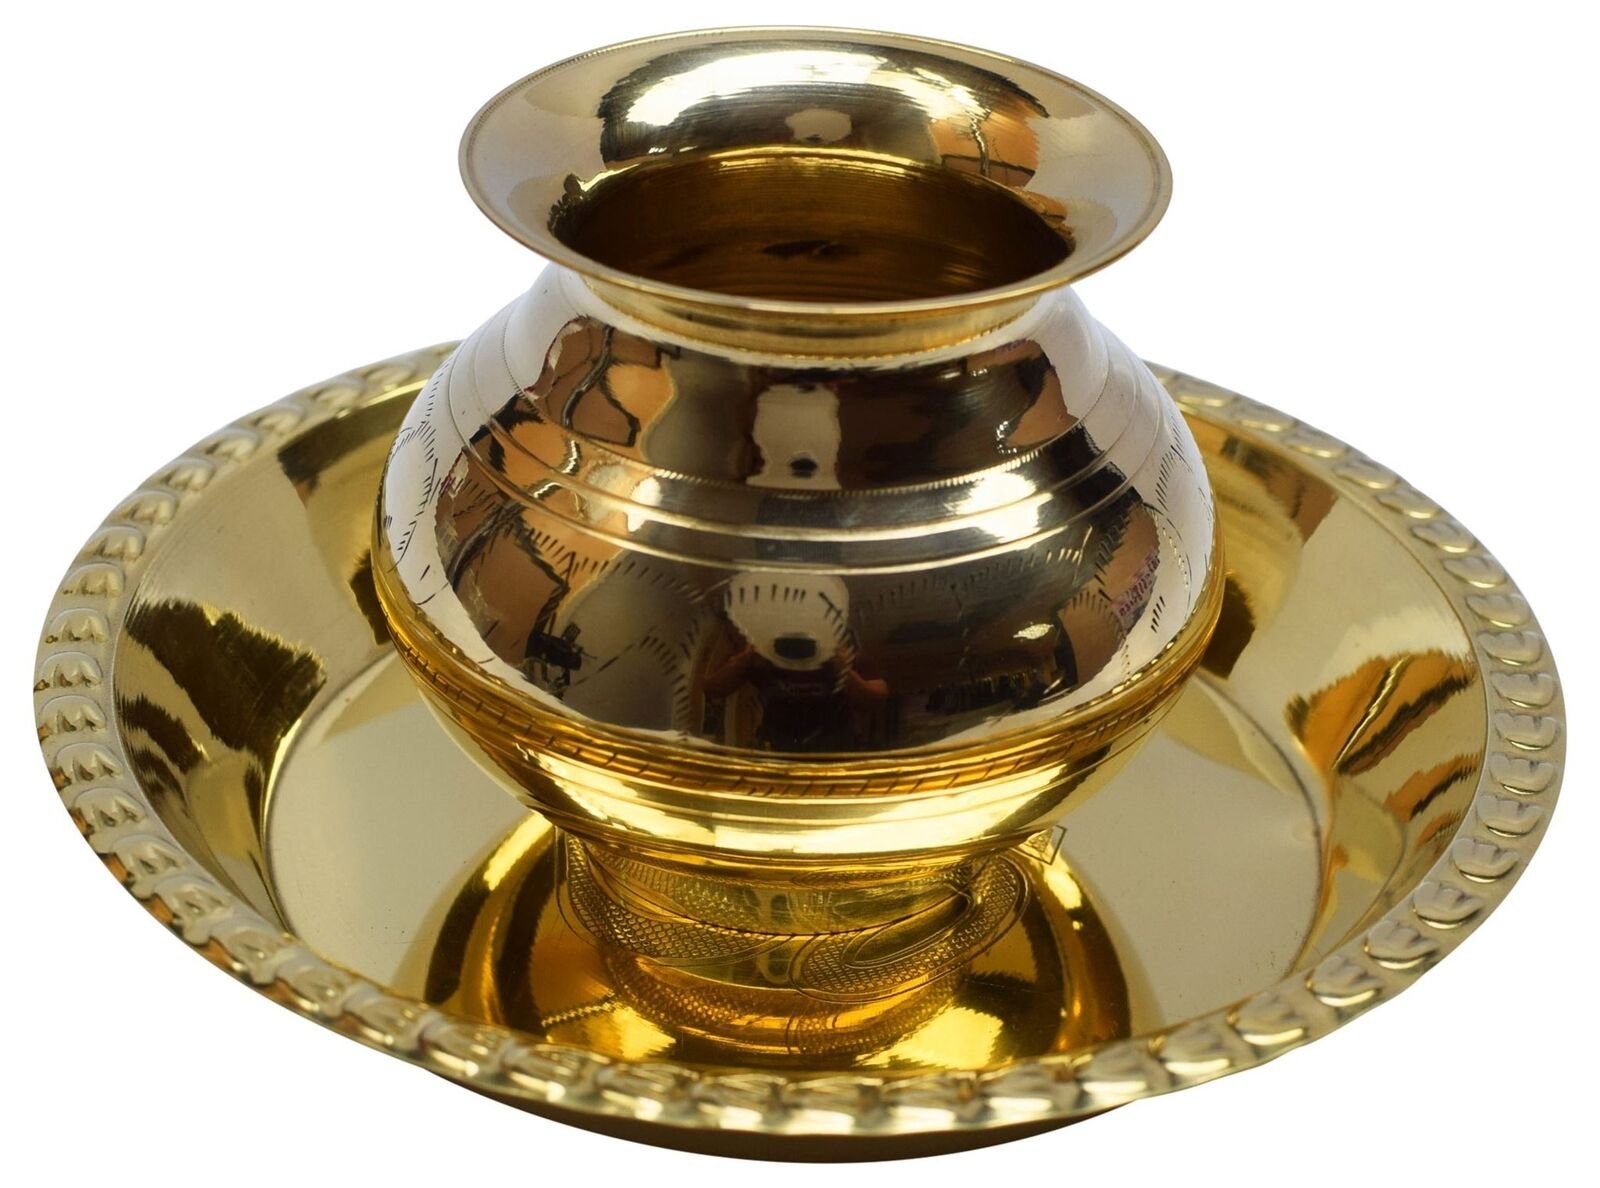 OM SHRI OMKalsa Parai Puja Accessory Gifts Pooja Thali Om Gayatri Mantra Brass Kalash Lota Pot for Mandir Temple (Large)